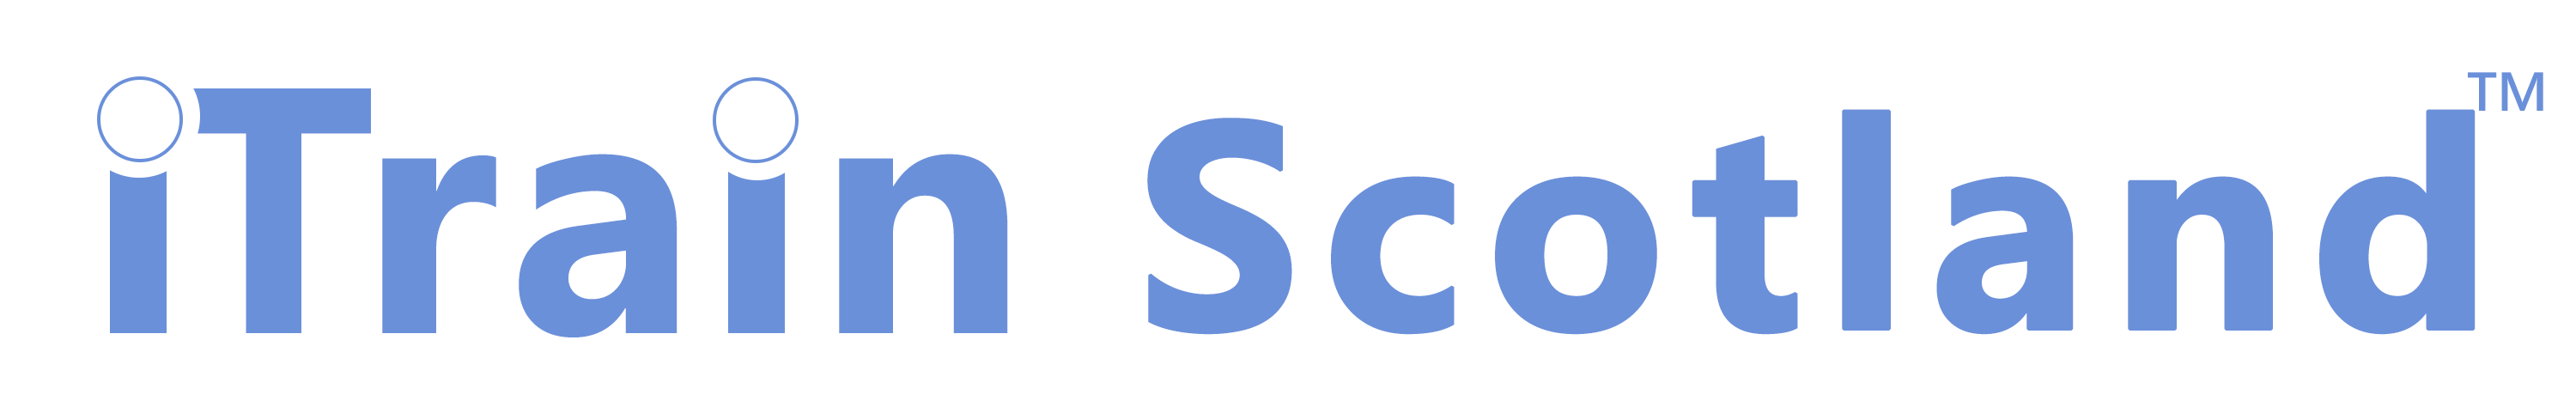 I Train Scotland Logo